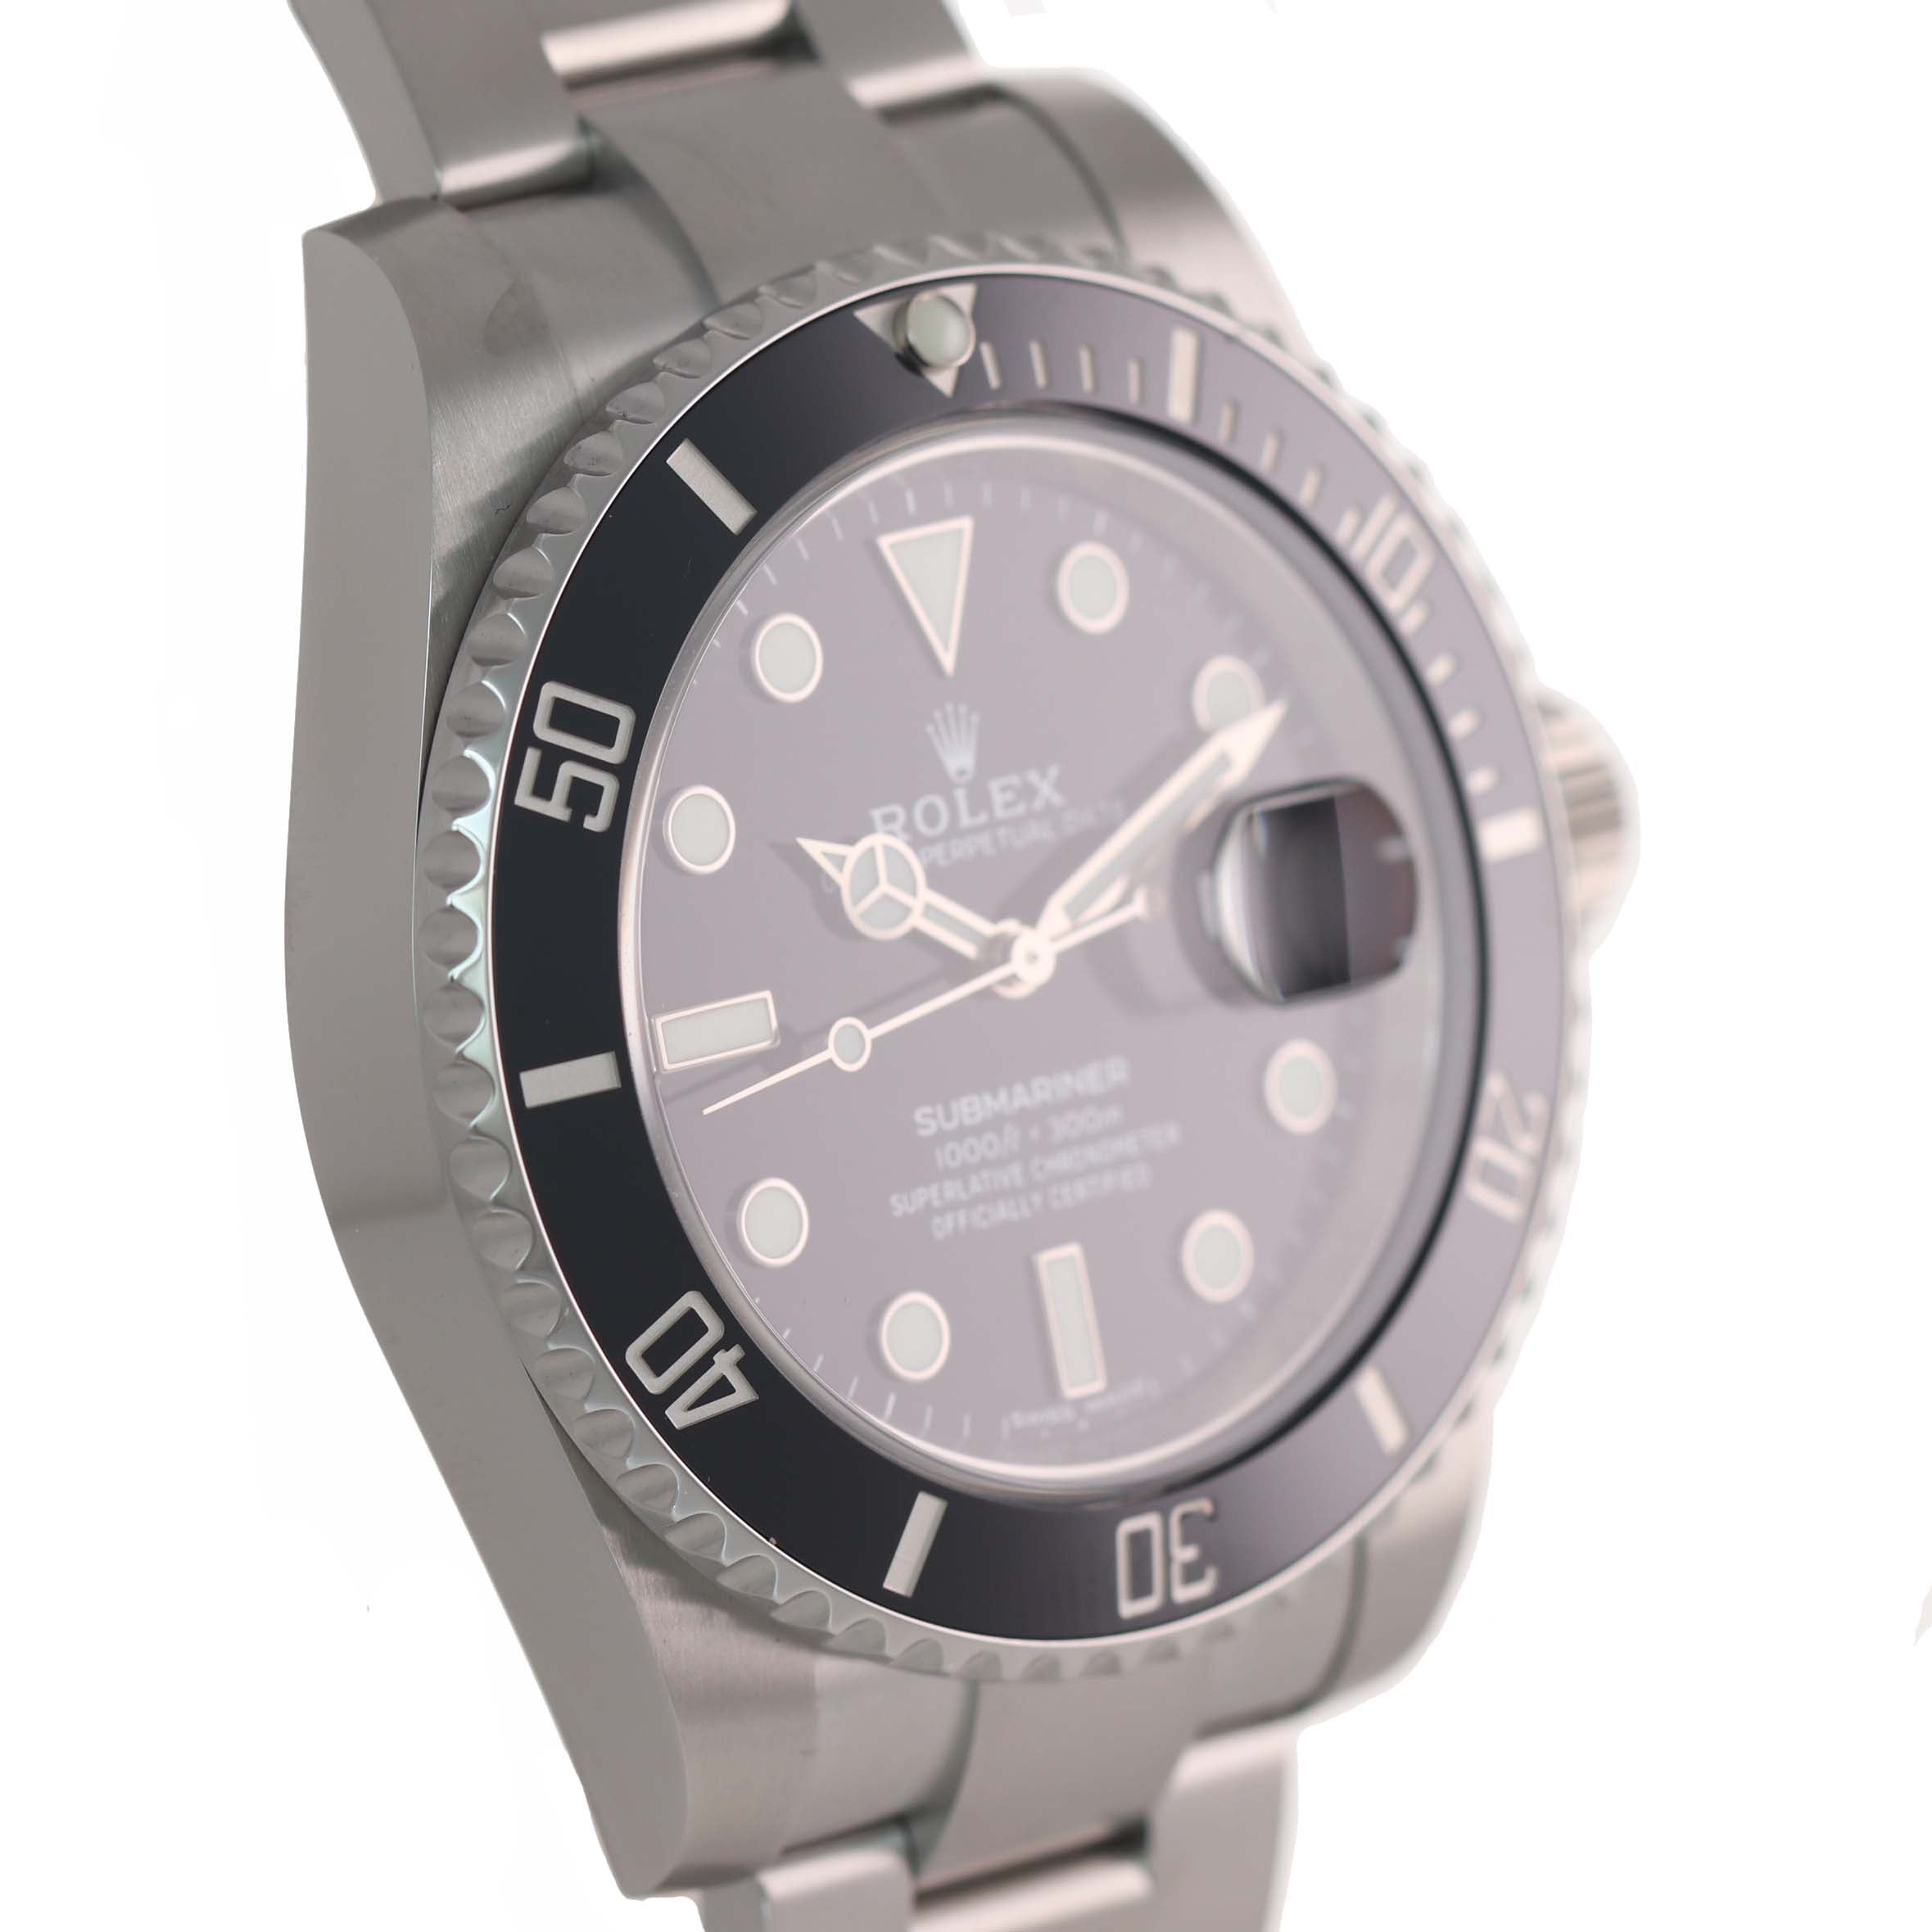 MINT 2017 PAPERS Mint Rolex Submariner Date 116610 Steel Black Ceramic Watch